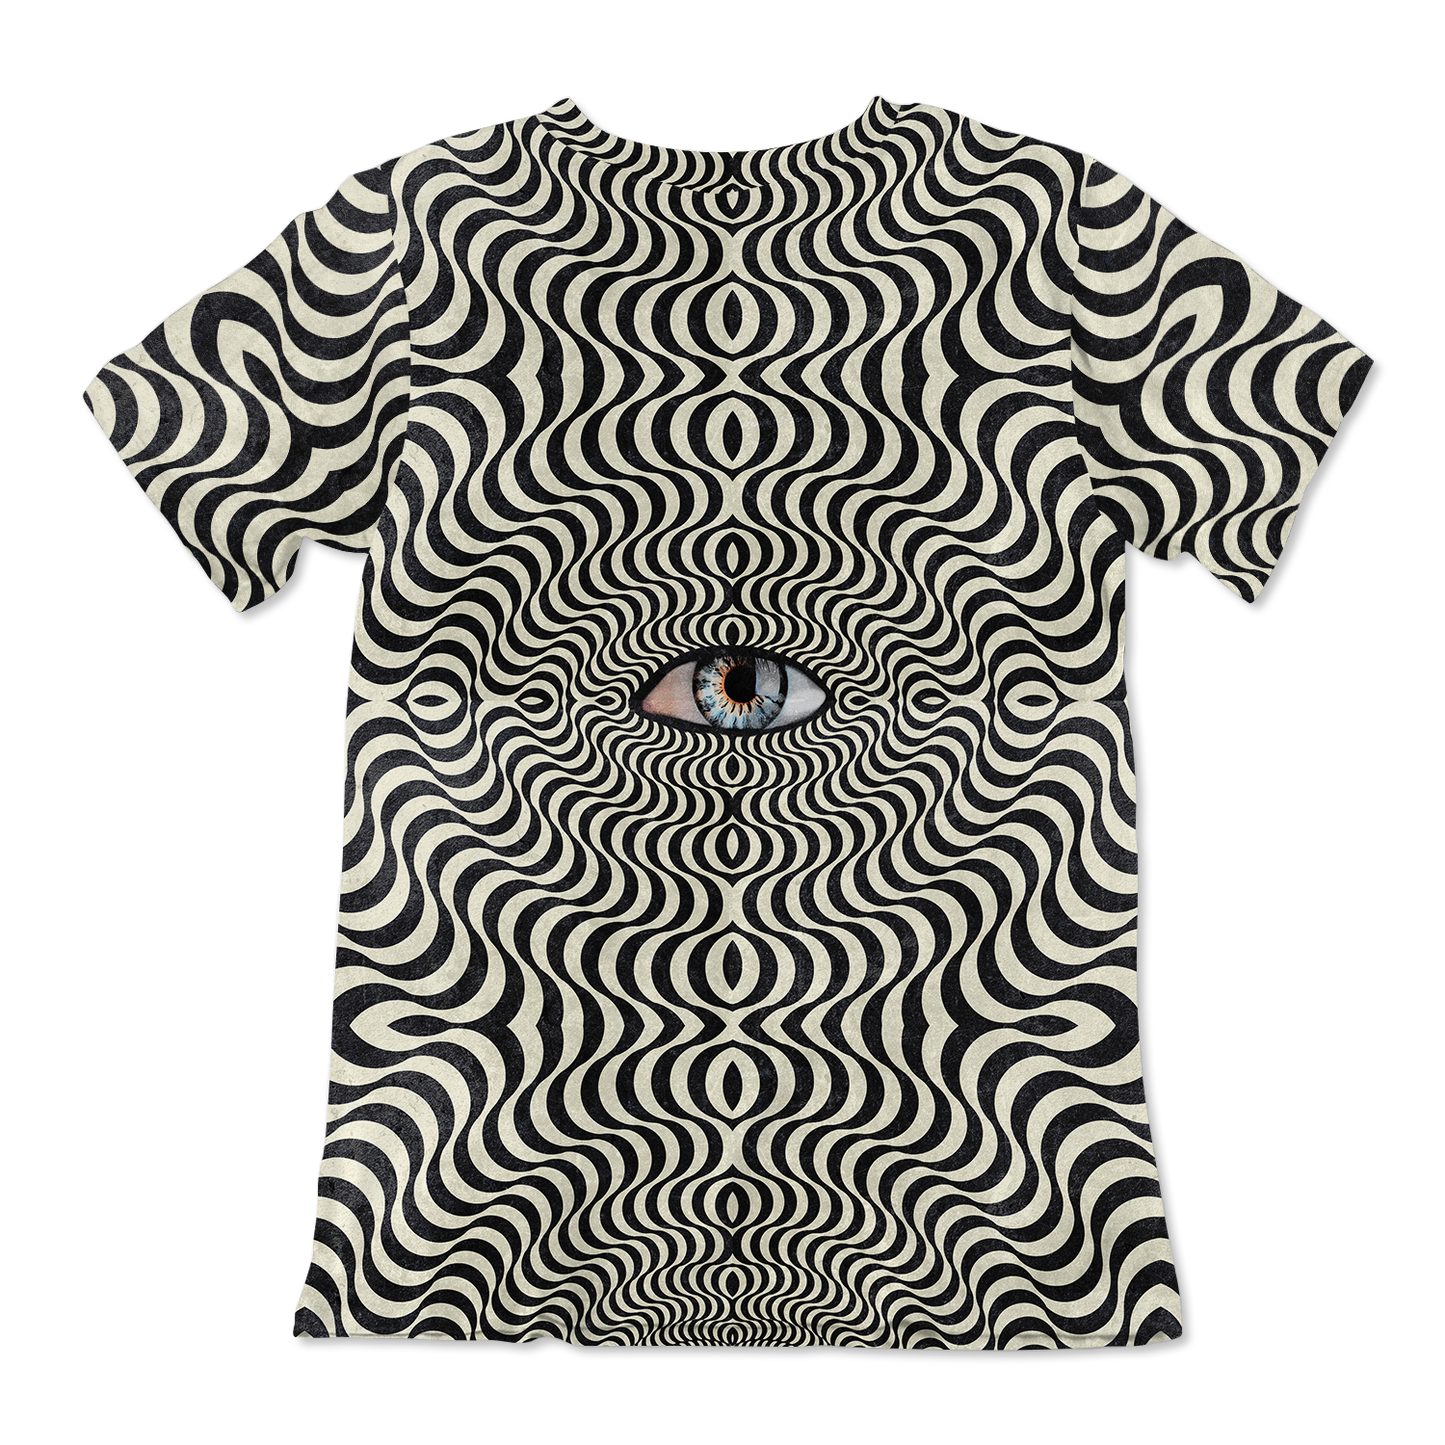 Hypnotic Eye All Over Print Unisex Tee